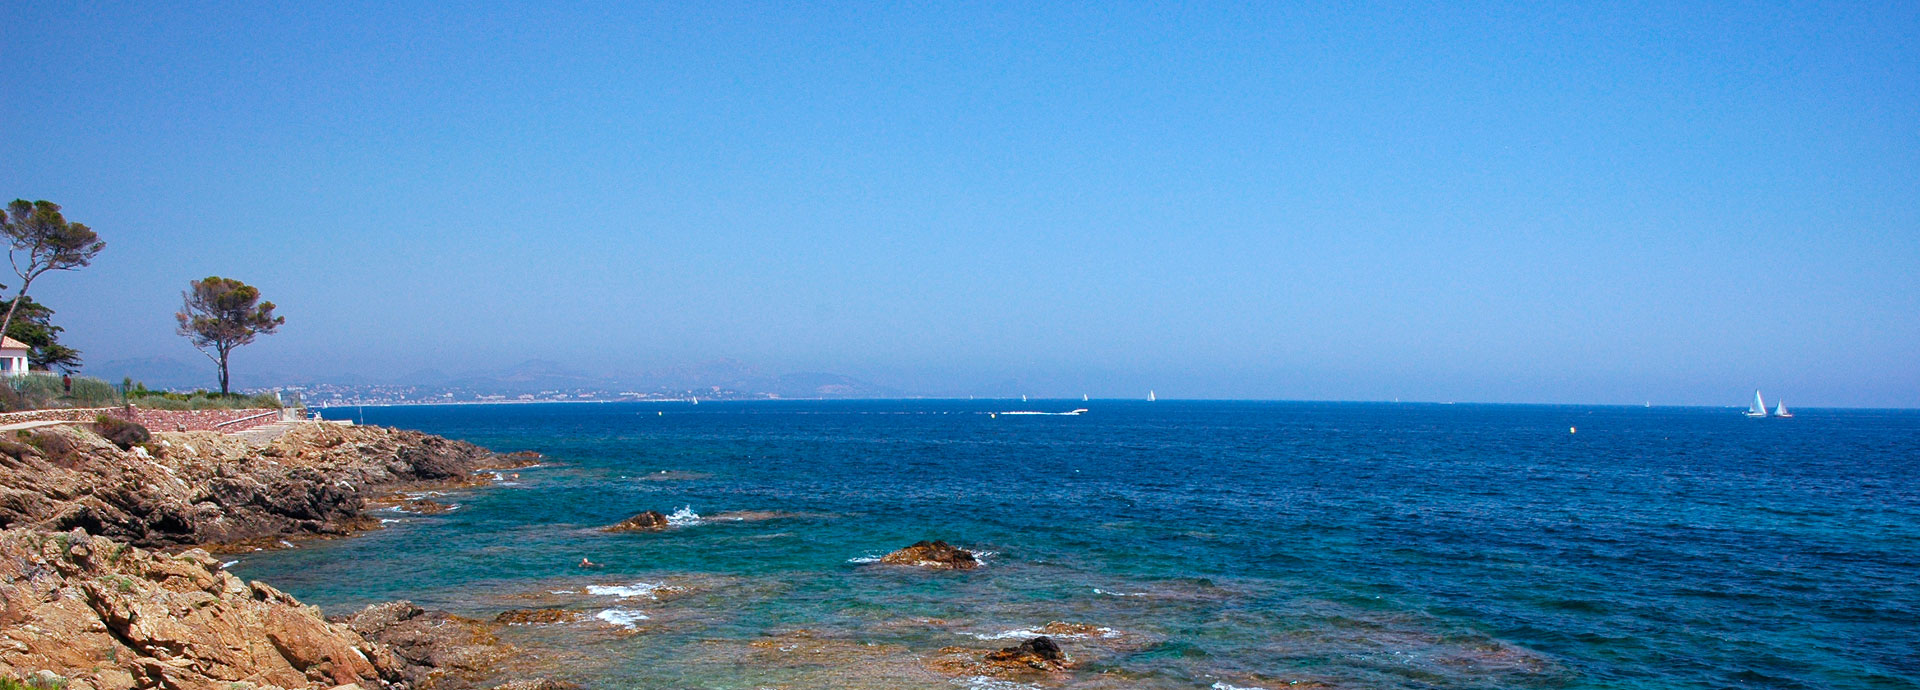 Holiday rentals under the sun of the Mediterranean : Coralia-vacances